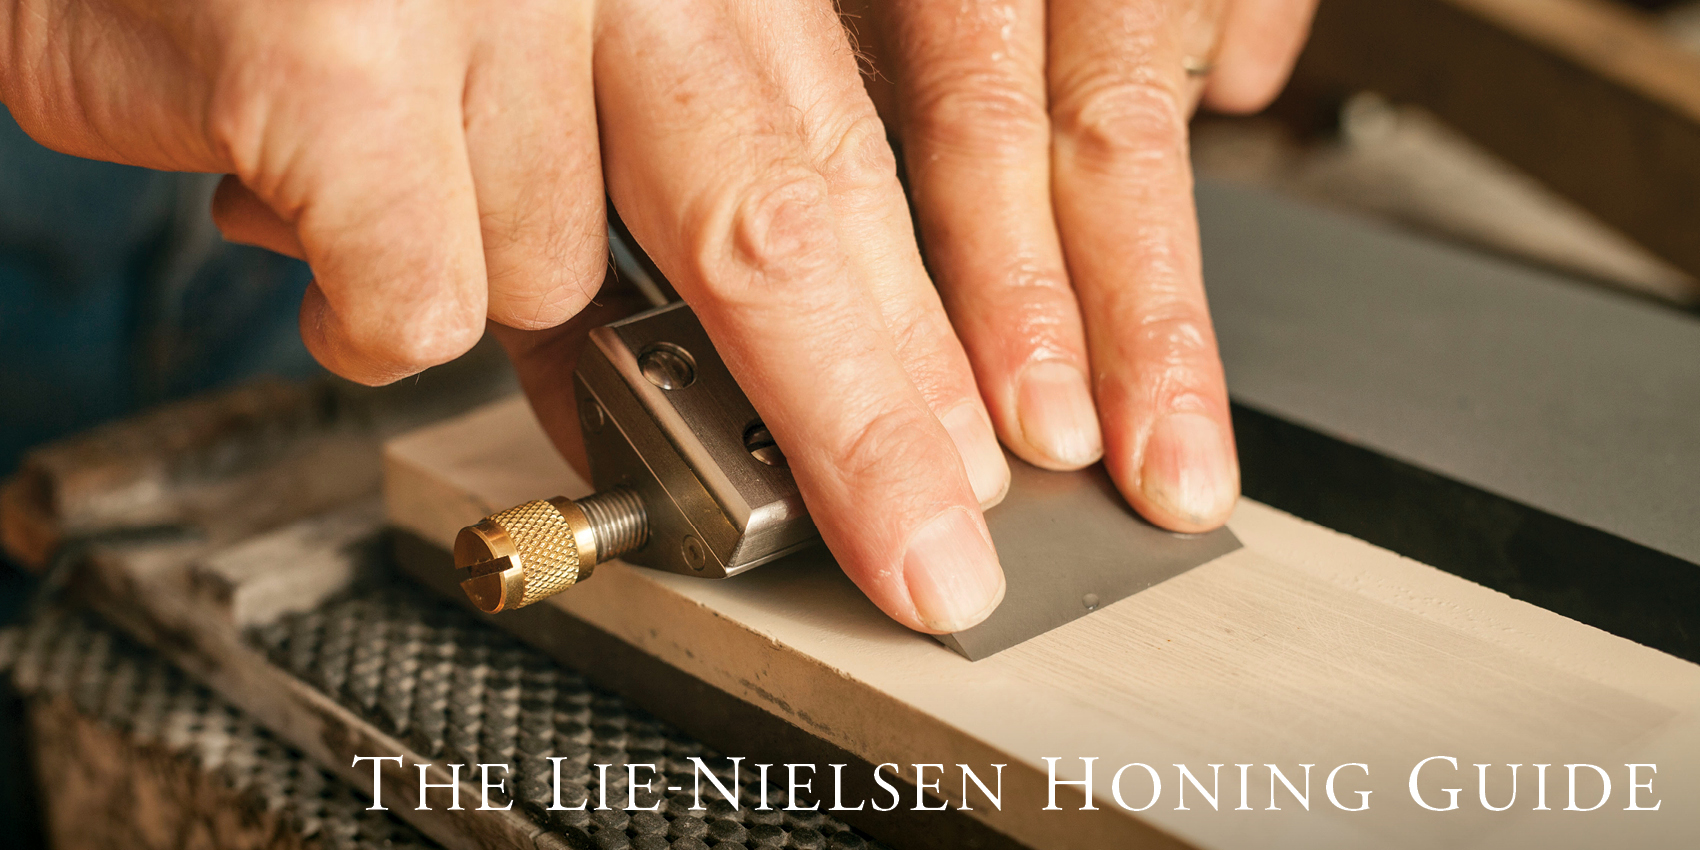 The LieNielsen Honing Guide